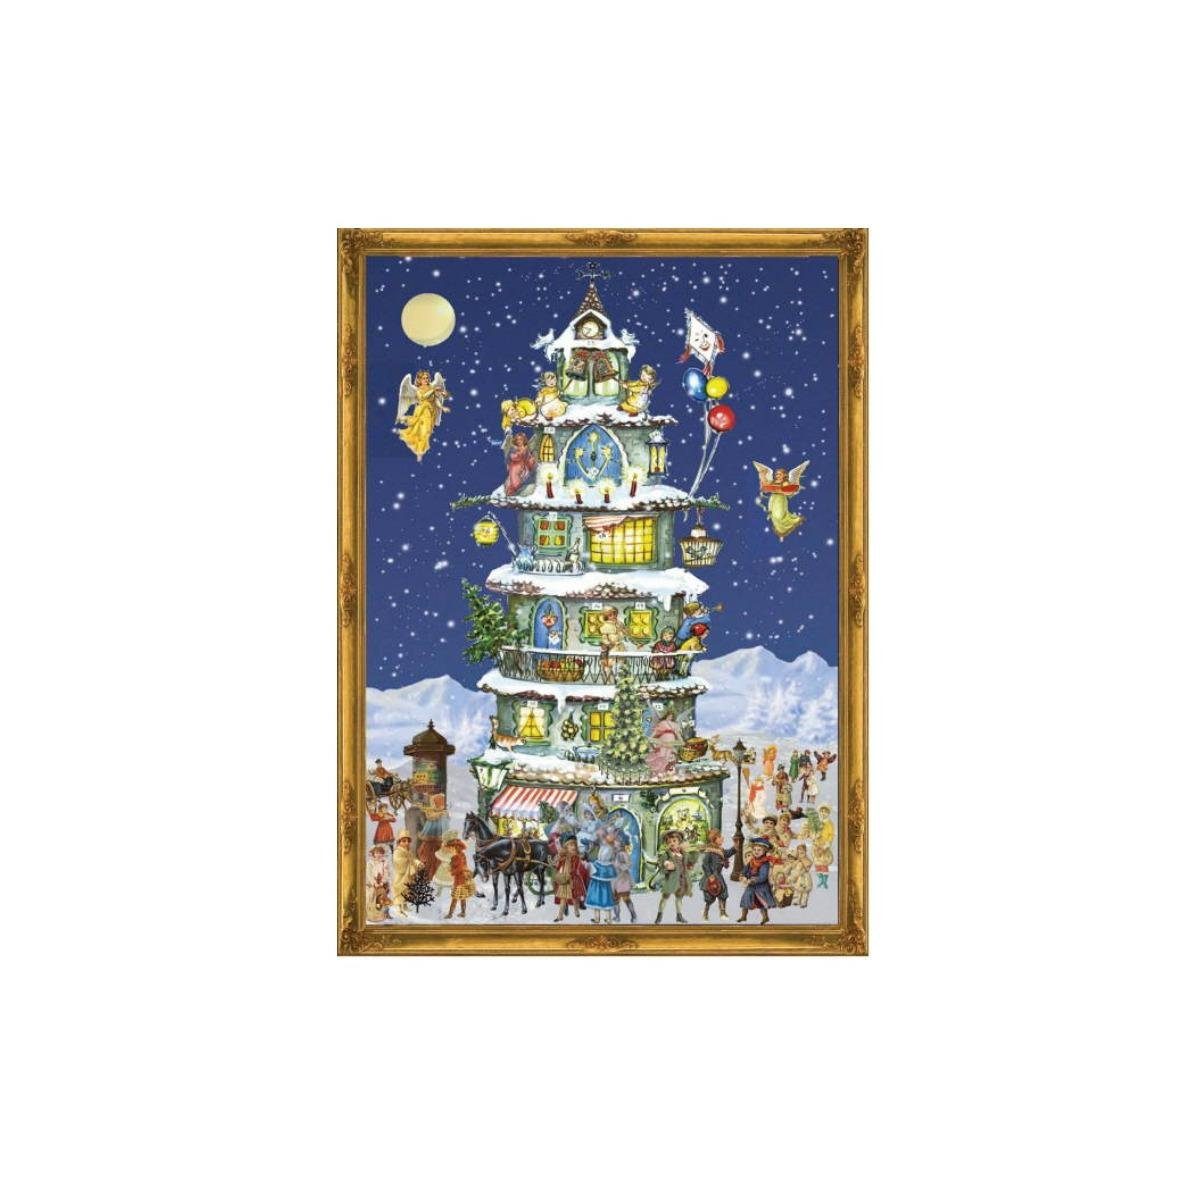 Richard Sellmer Verlag Adventskalender 70104 - Adventskalender - Weihnachtsturm, 35,5cm x 26,5cm